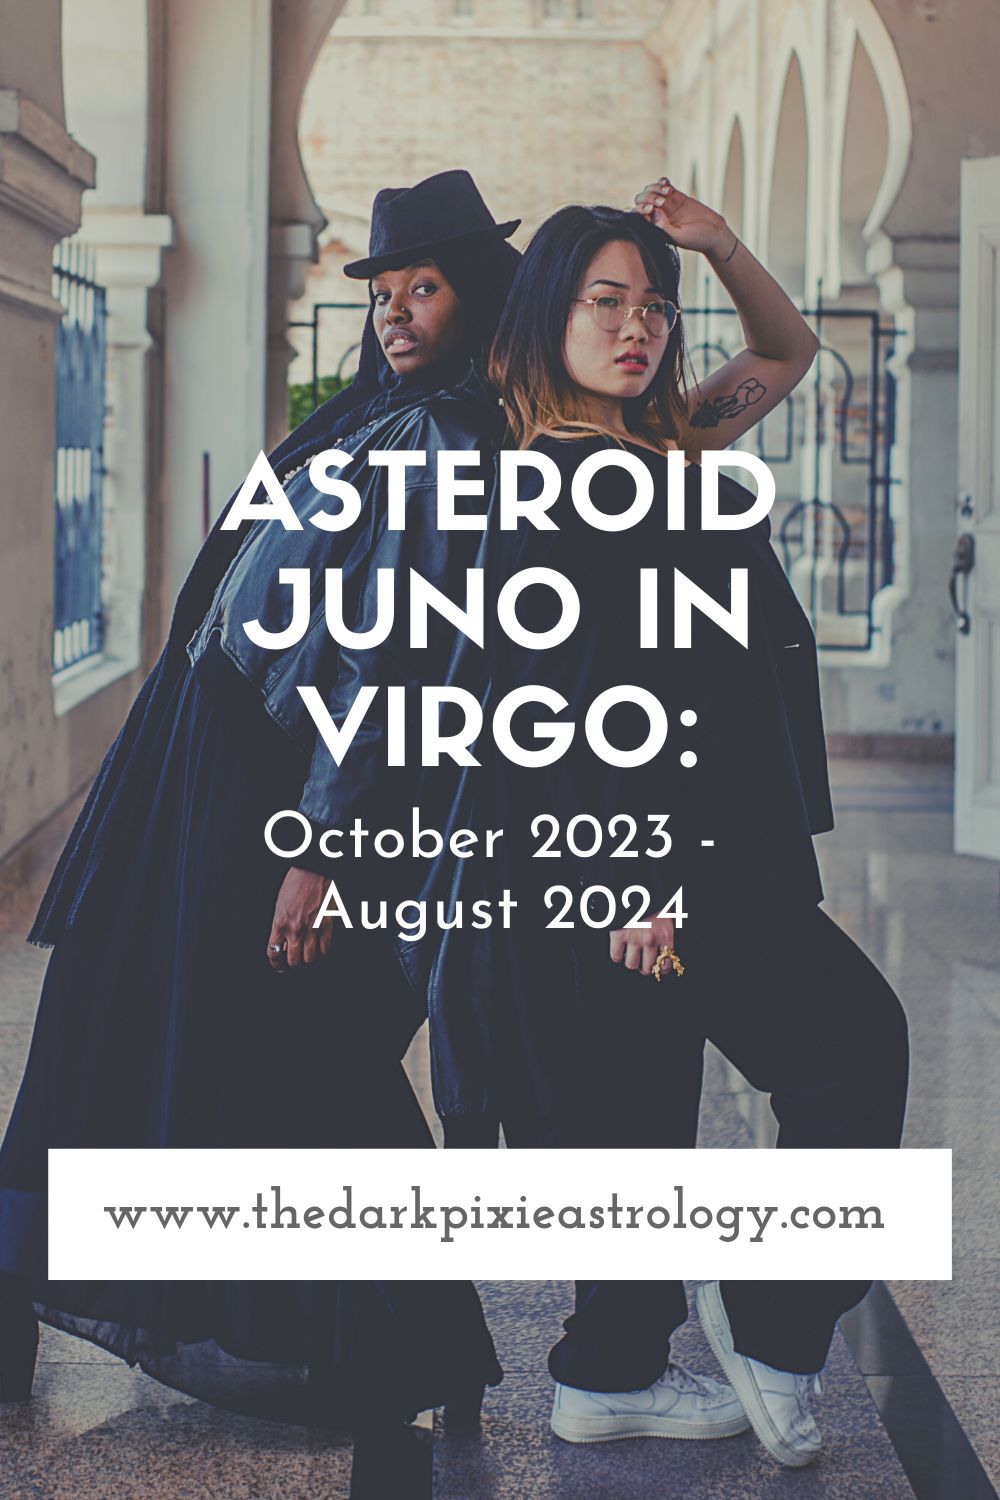 Asteroid Juno in Virgo: October 2023 - August 2024 - The Dark Pixie Astrology